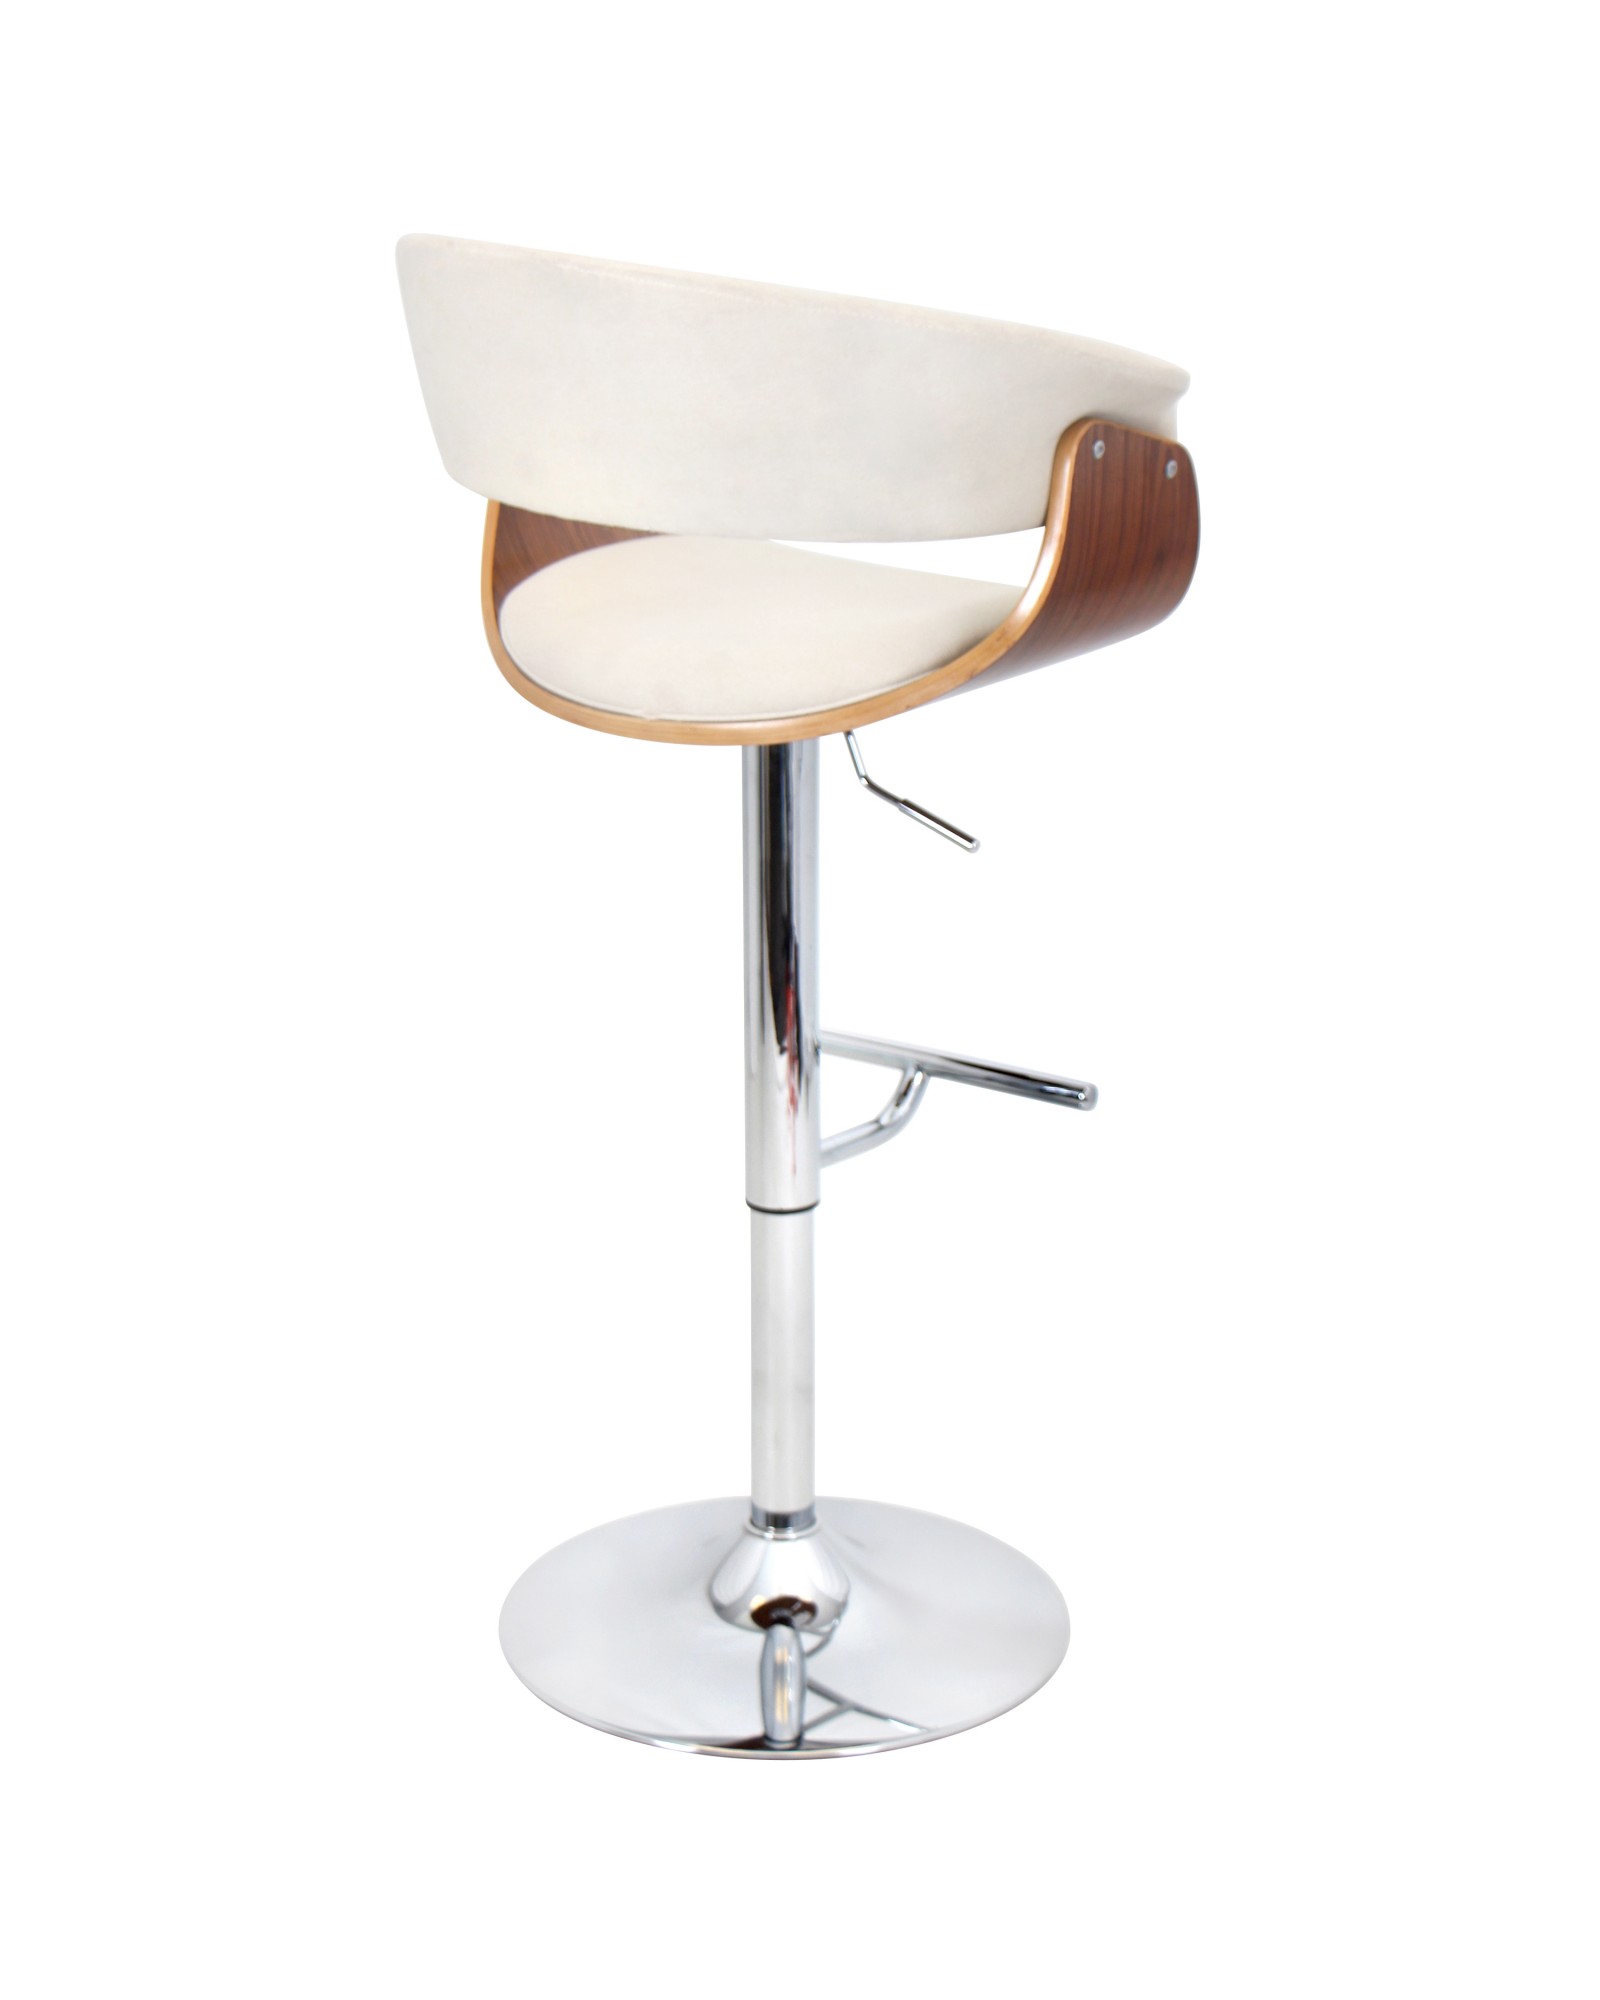 Vintage Mod Mid-Century Modern Adjustable Barstool with Swivel in Walnut and Cream Fabric